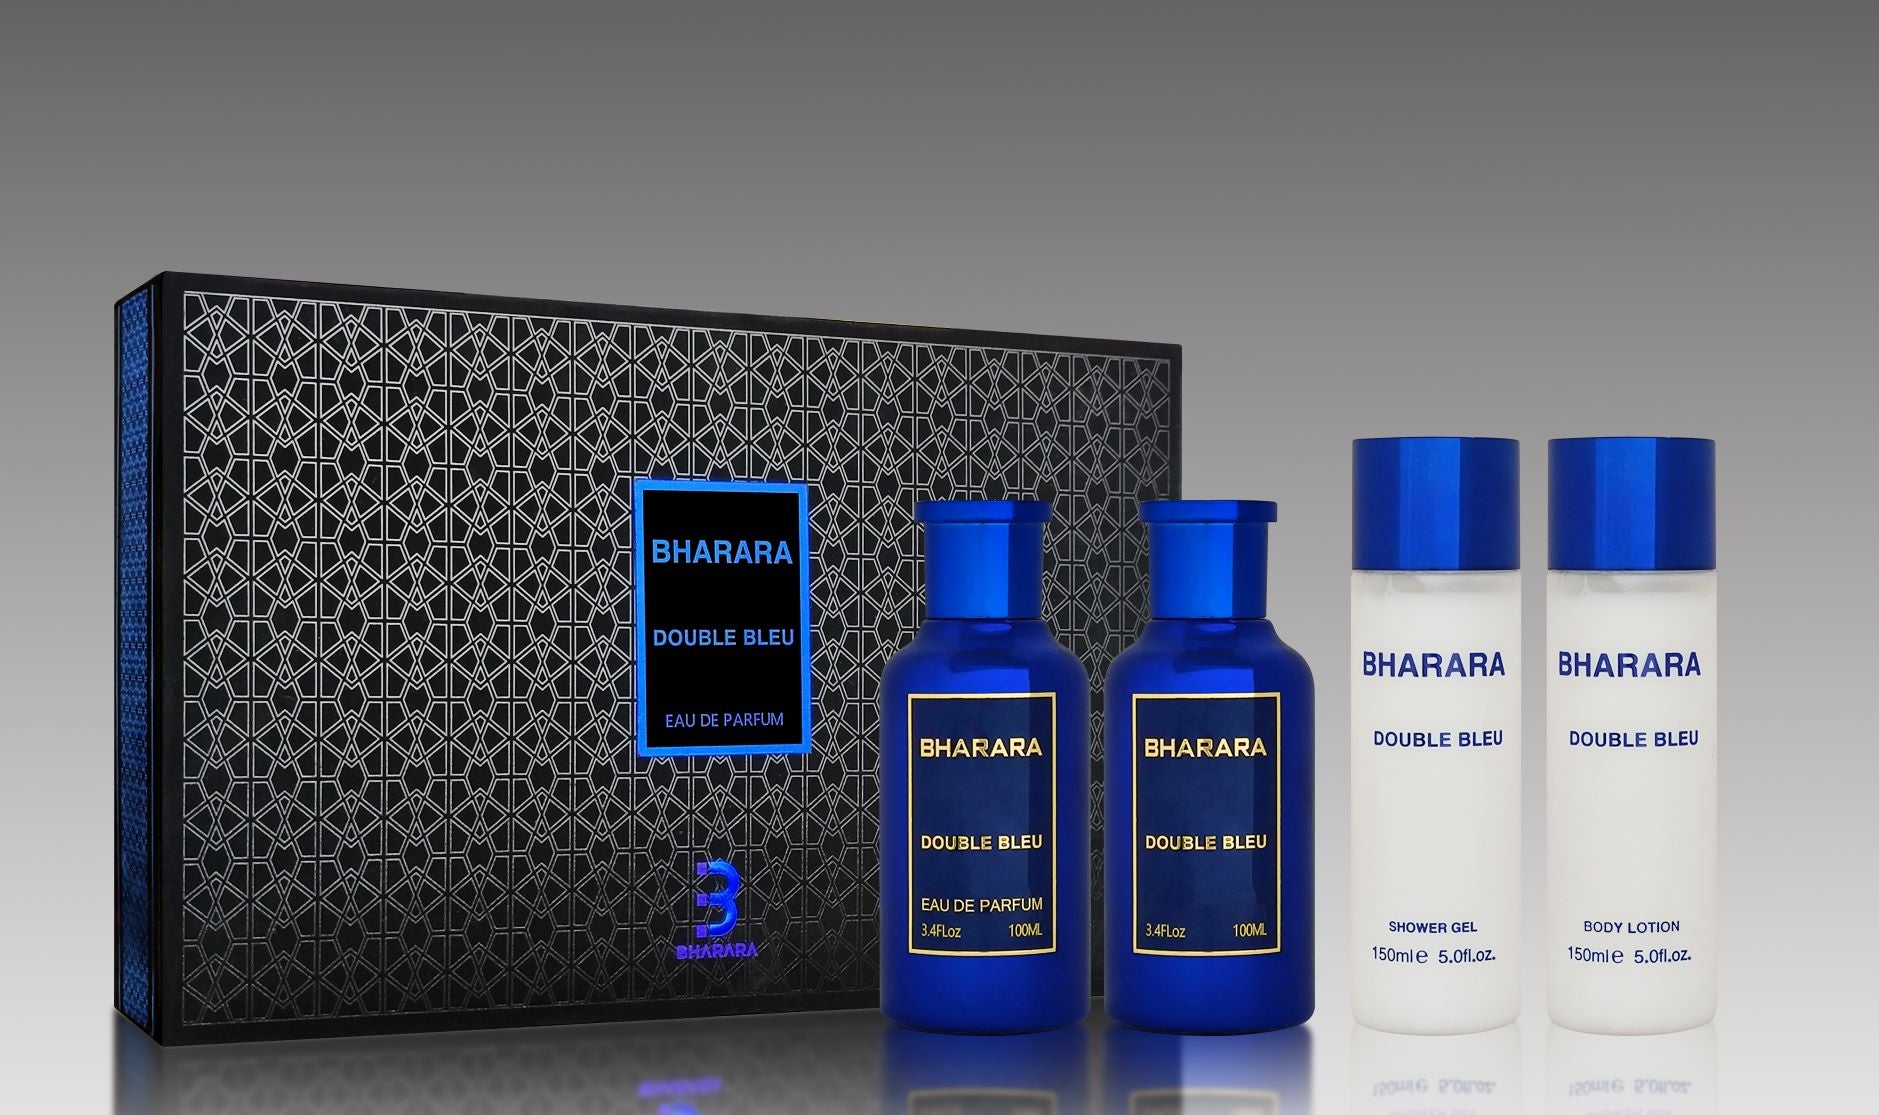 Bharara Double Bleu Gift Set – Bharara Beauty